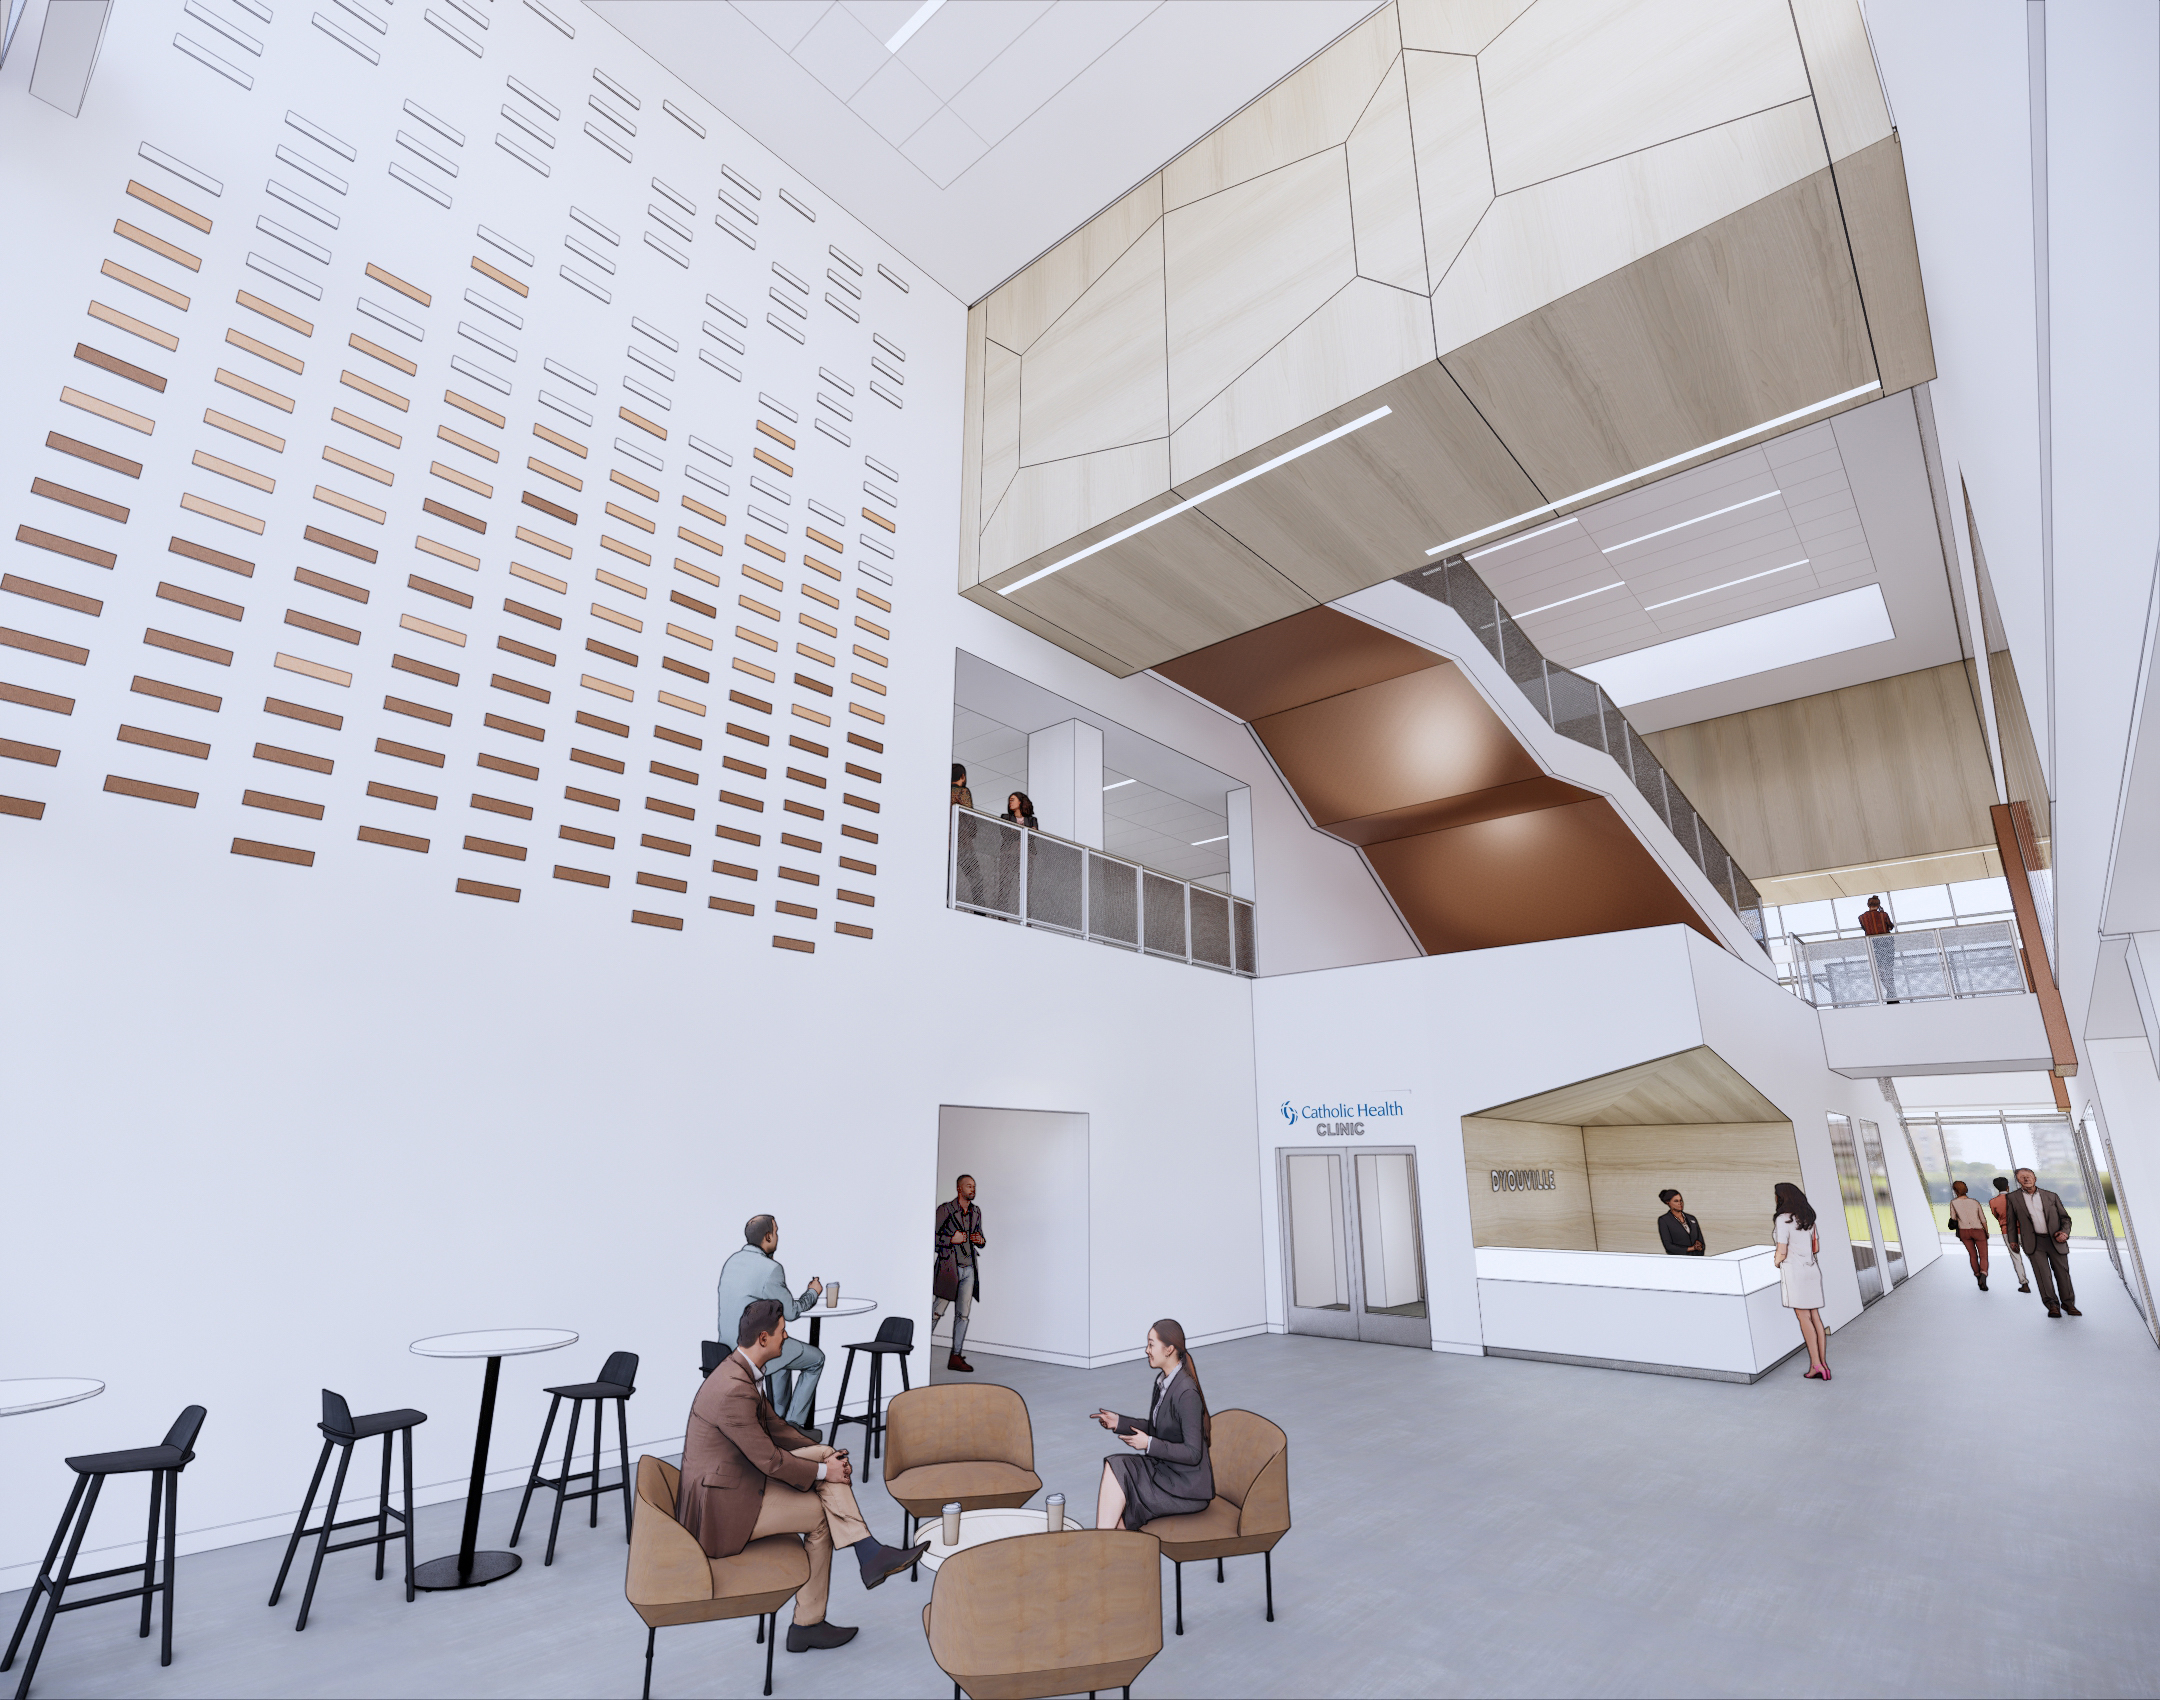 illustration of a health facility lobby/atrium